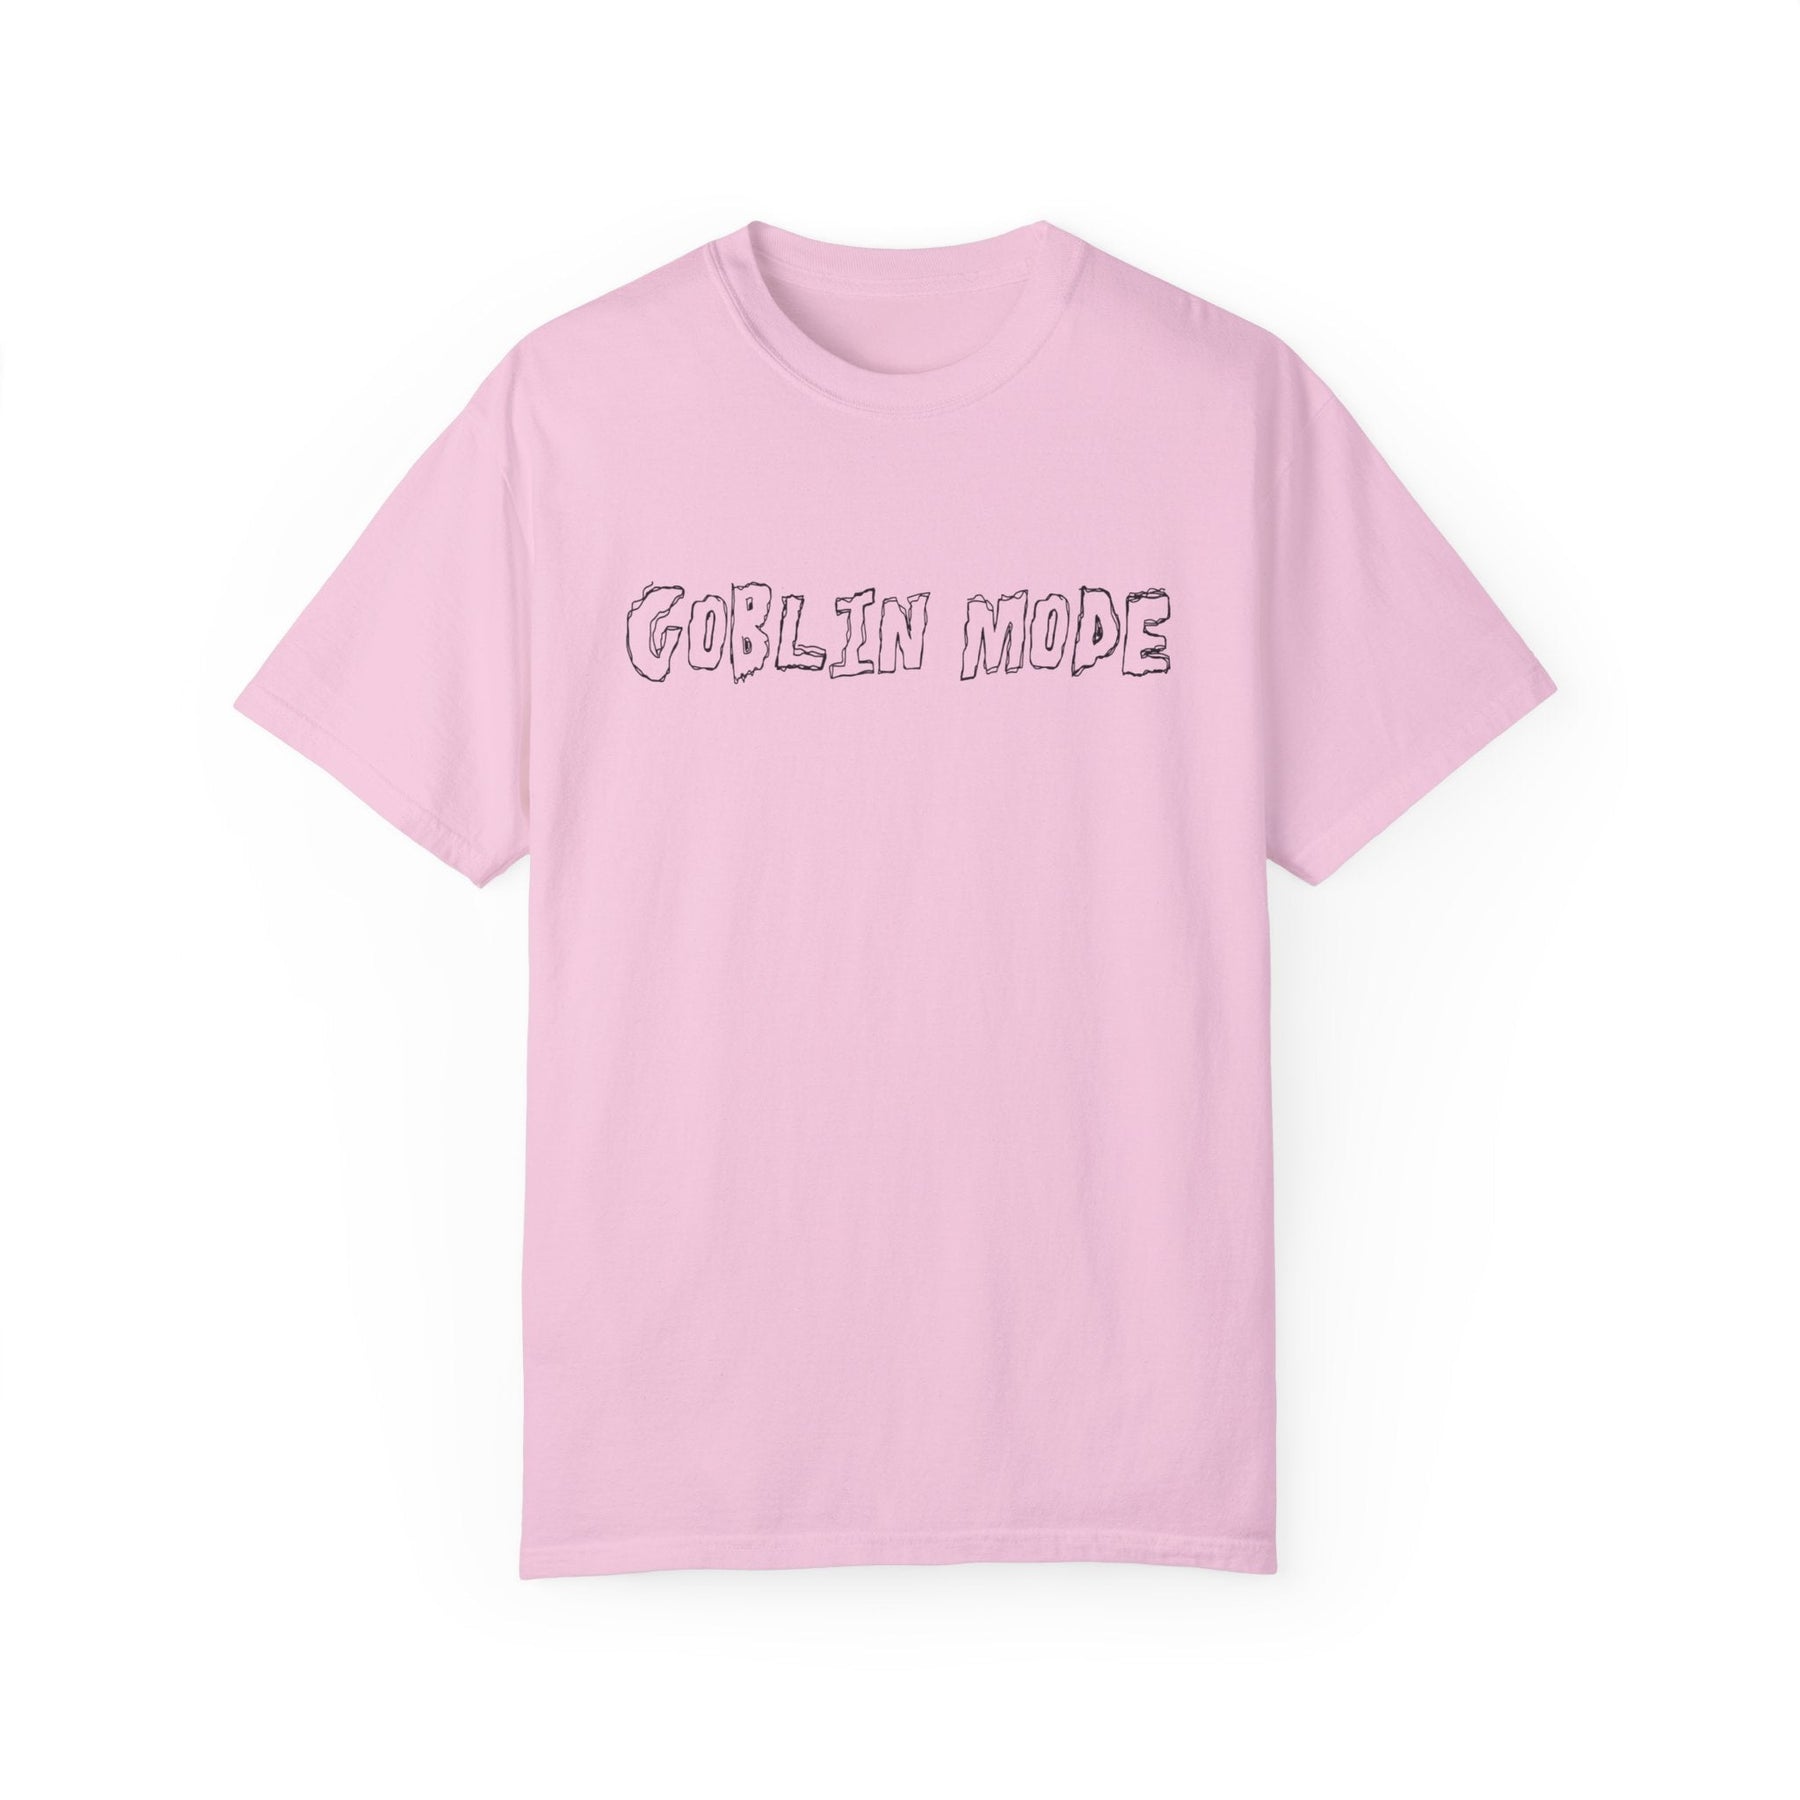 Goblin Mode Comfy Tee - Goth Cloth Co.T - Shirt12561755863393264621